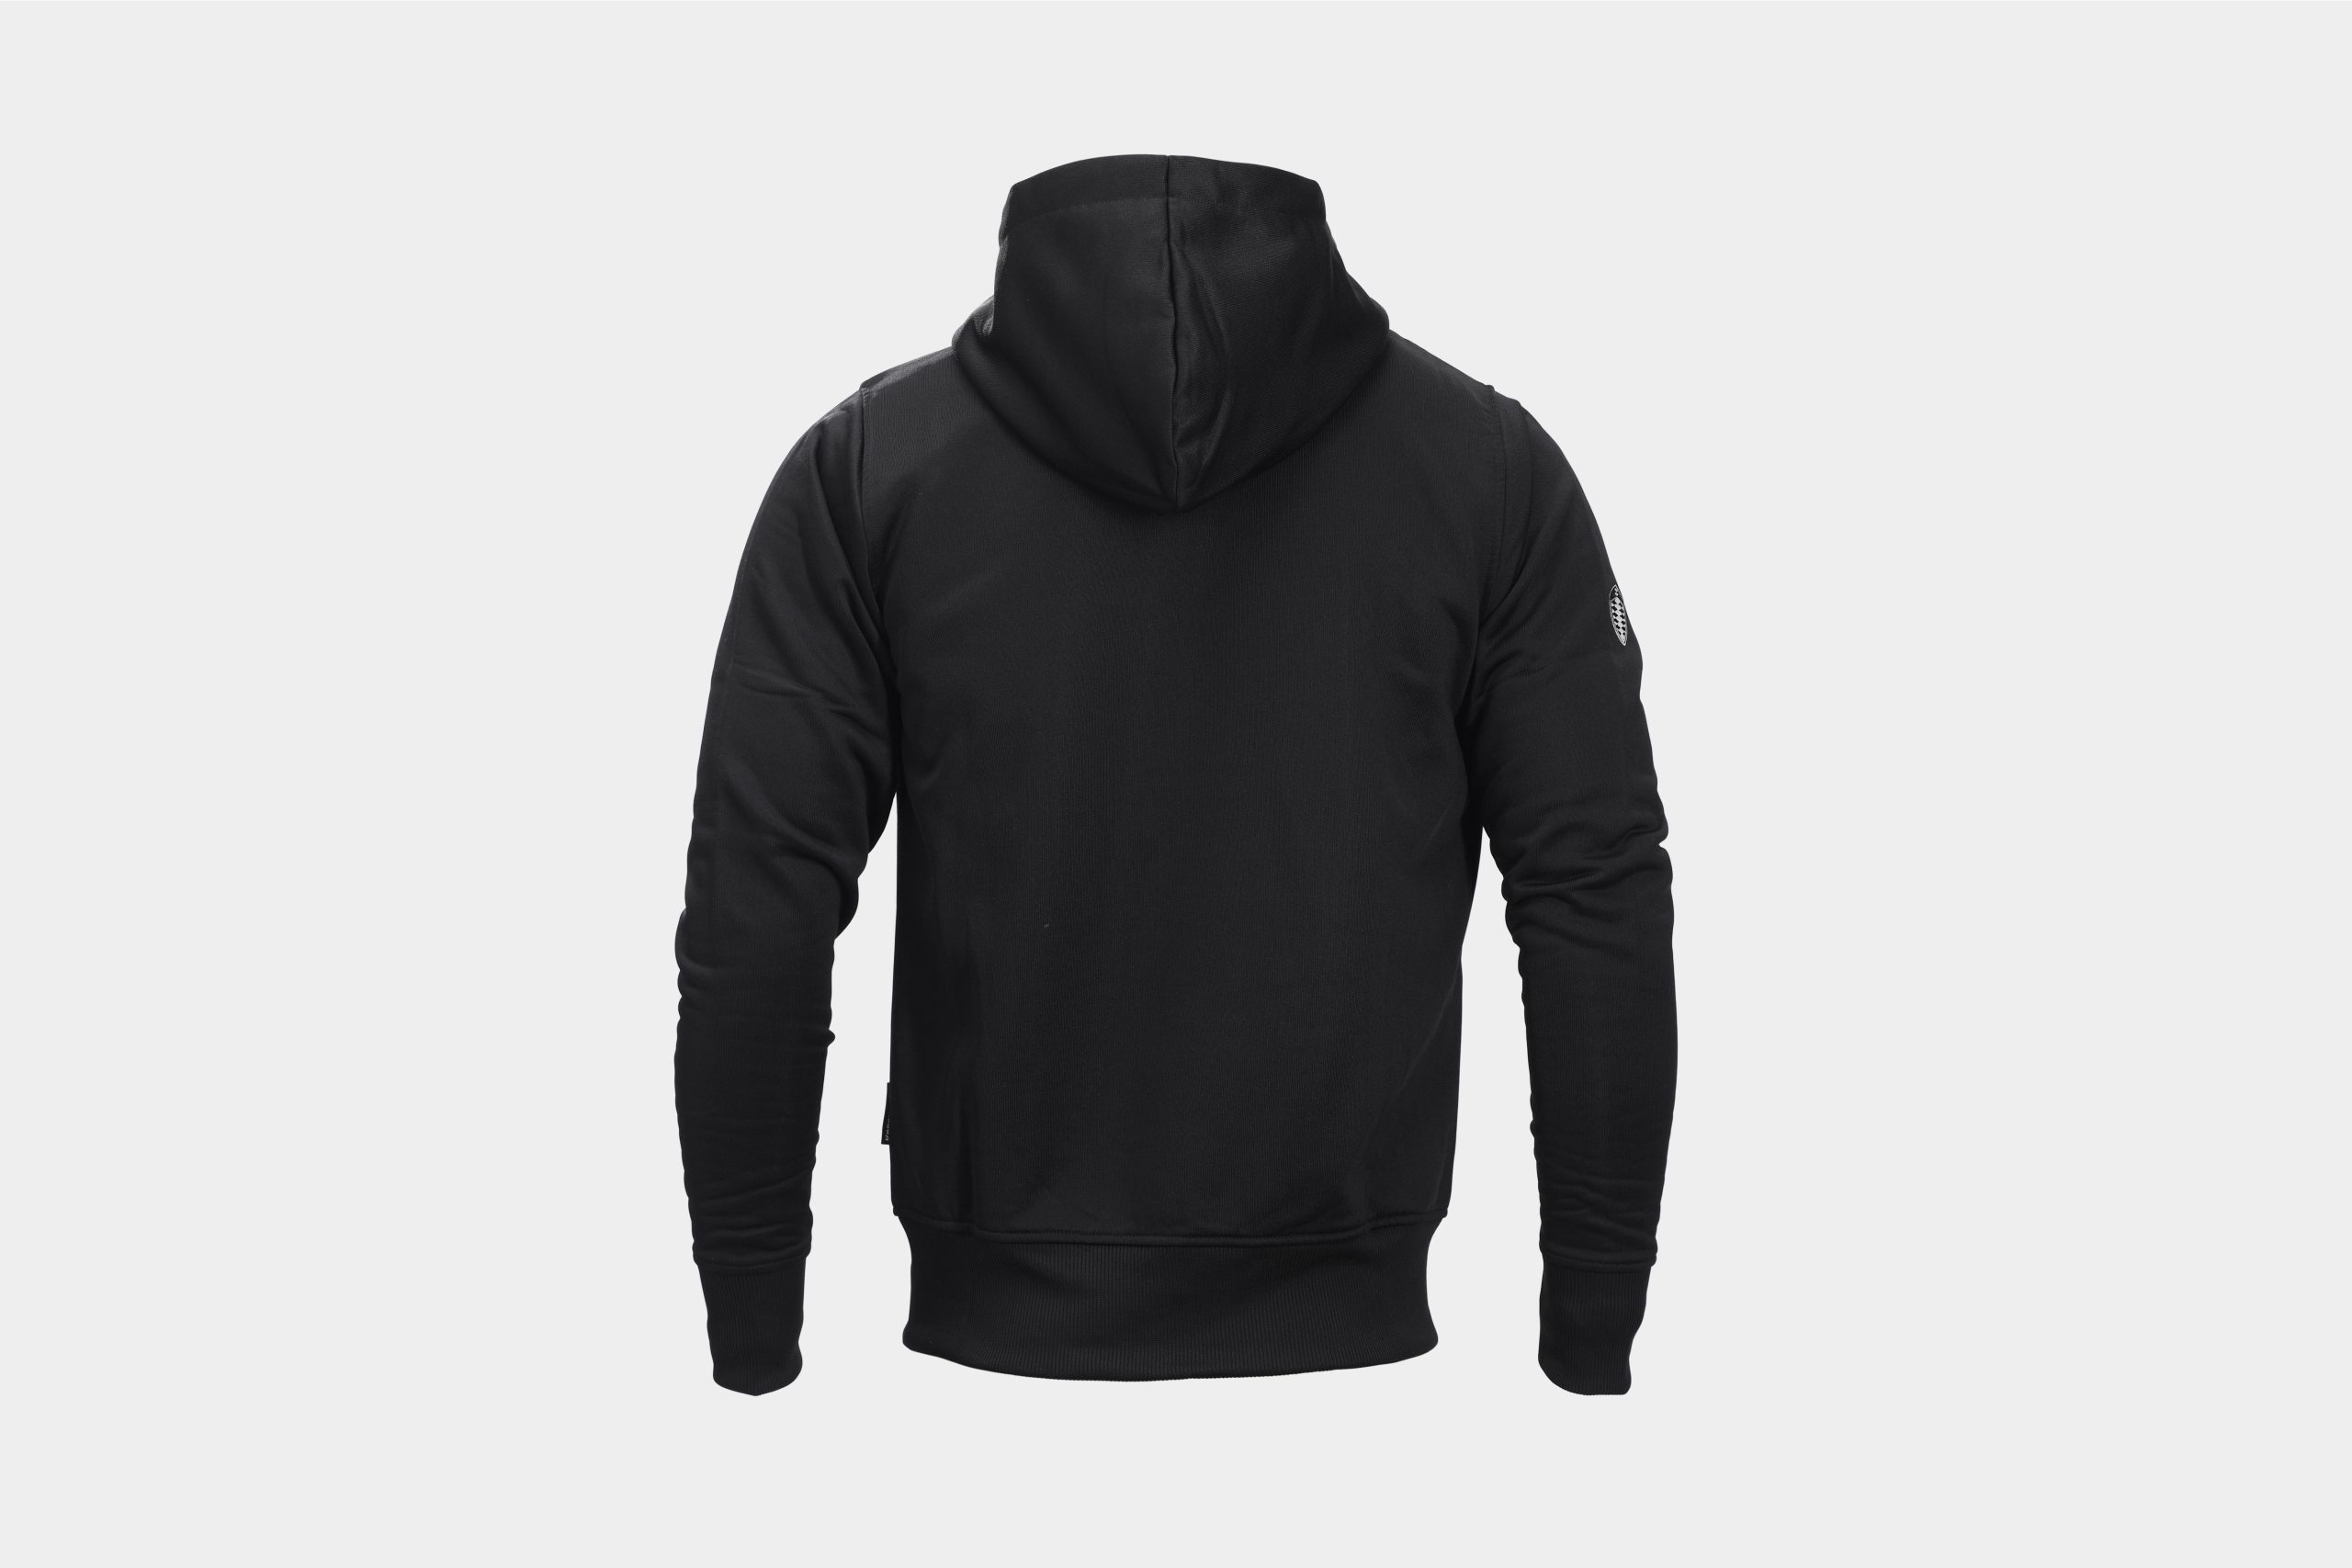 https://gear.koenigsegg.com/wp-content/uploads/2022/08/black-hoodie-jacket-bak-scaled-1.jpg